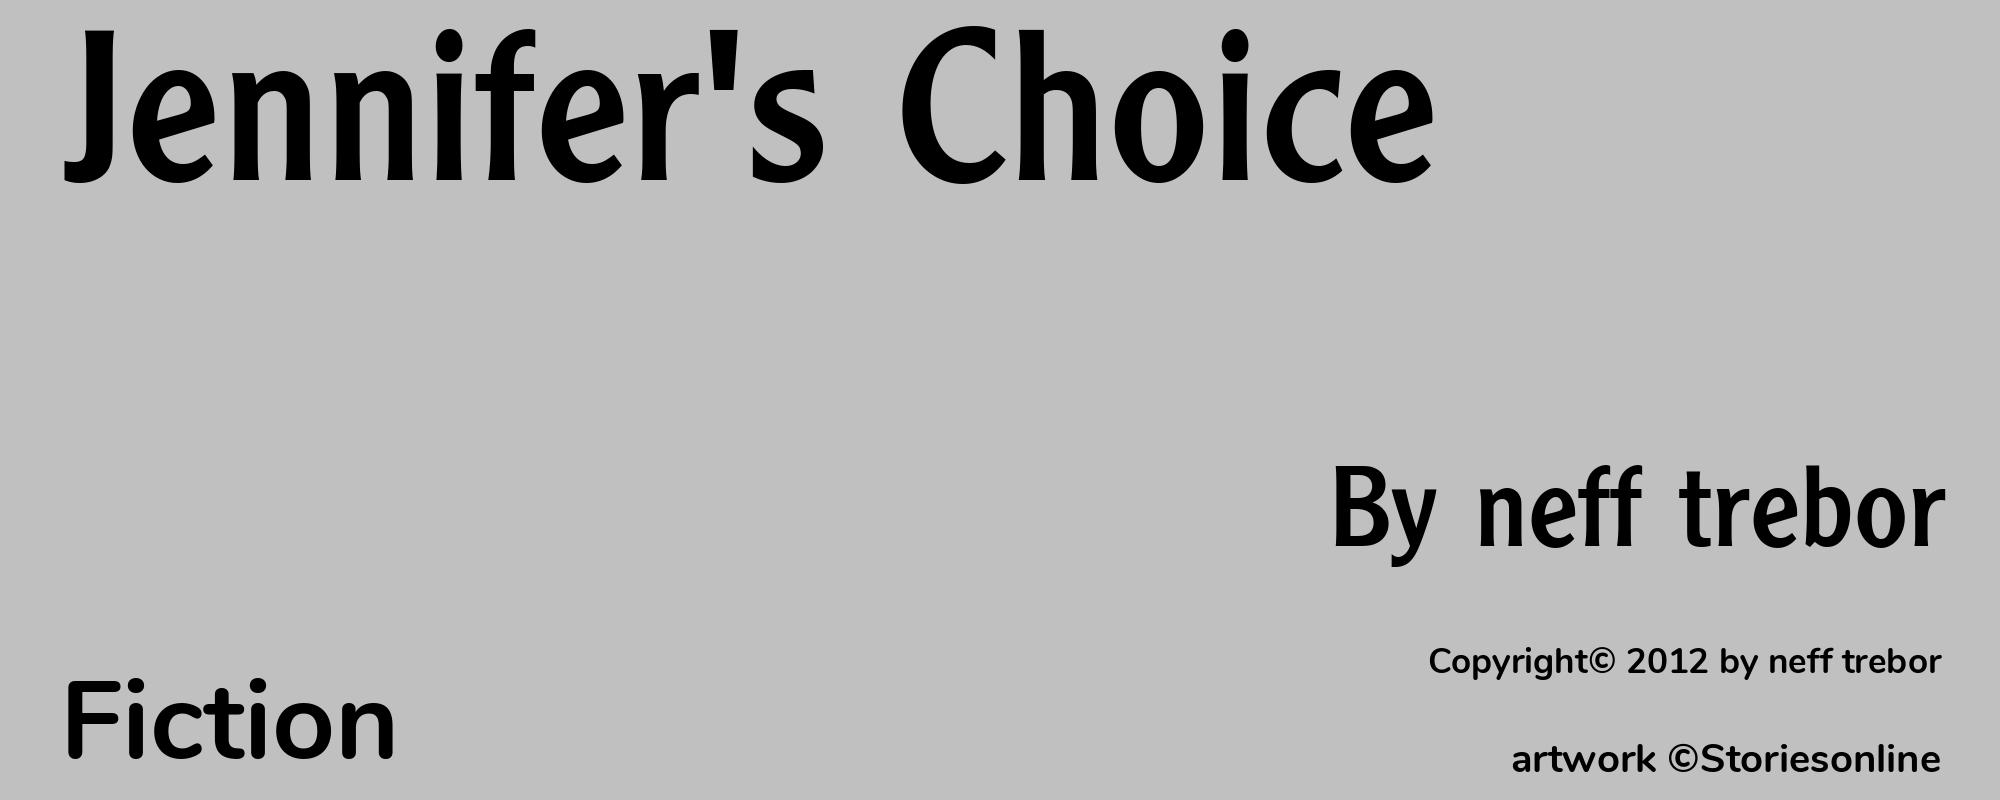 Jennifer's Choice - Cover